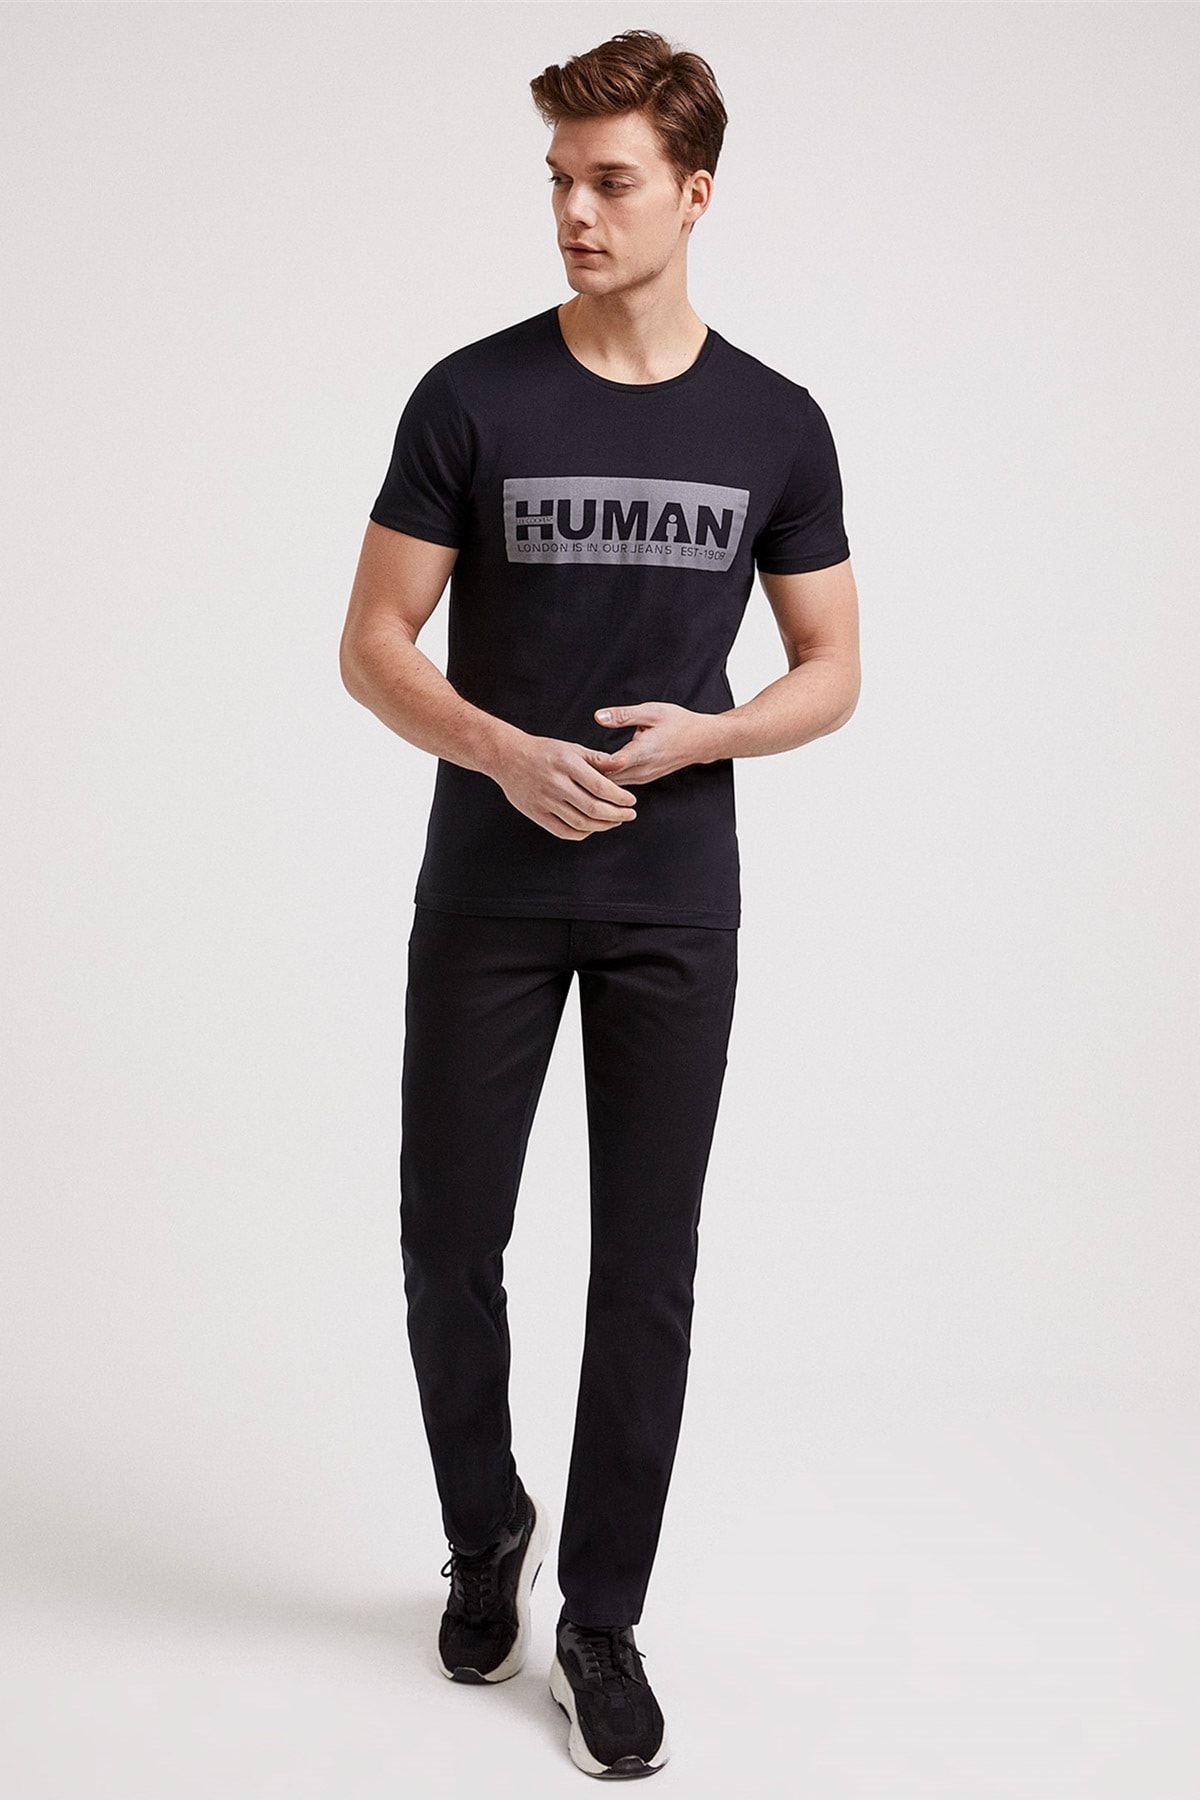 Lee Cooper Erkek Human O Yaka T-Shirt Siyah 202 LCM 242031